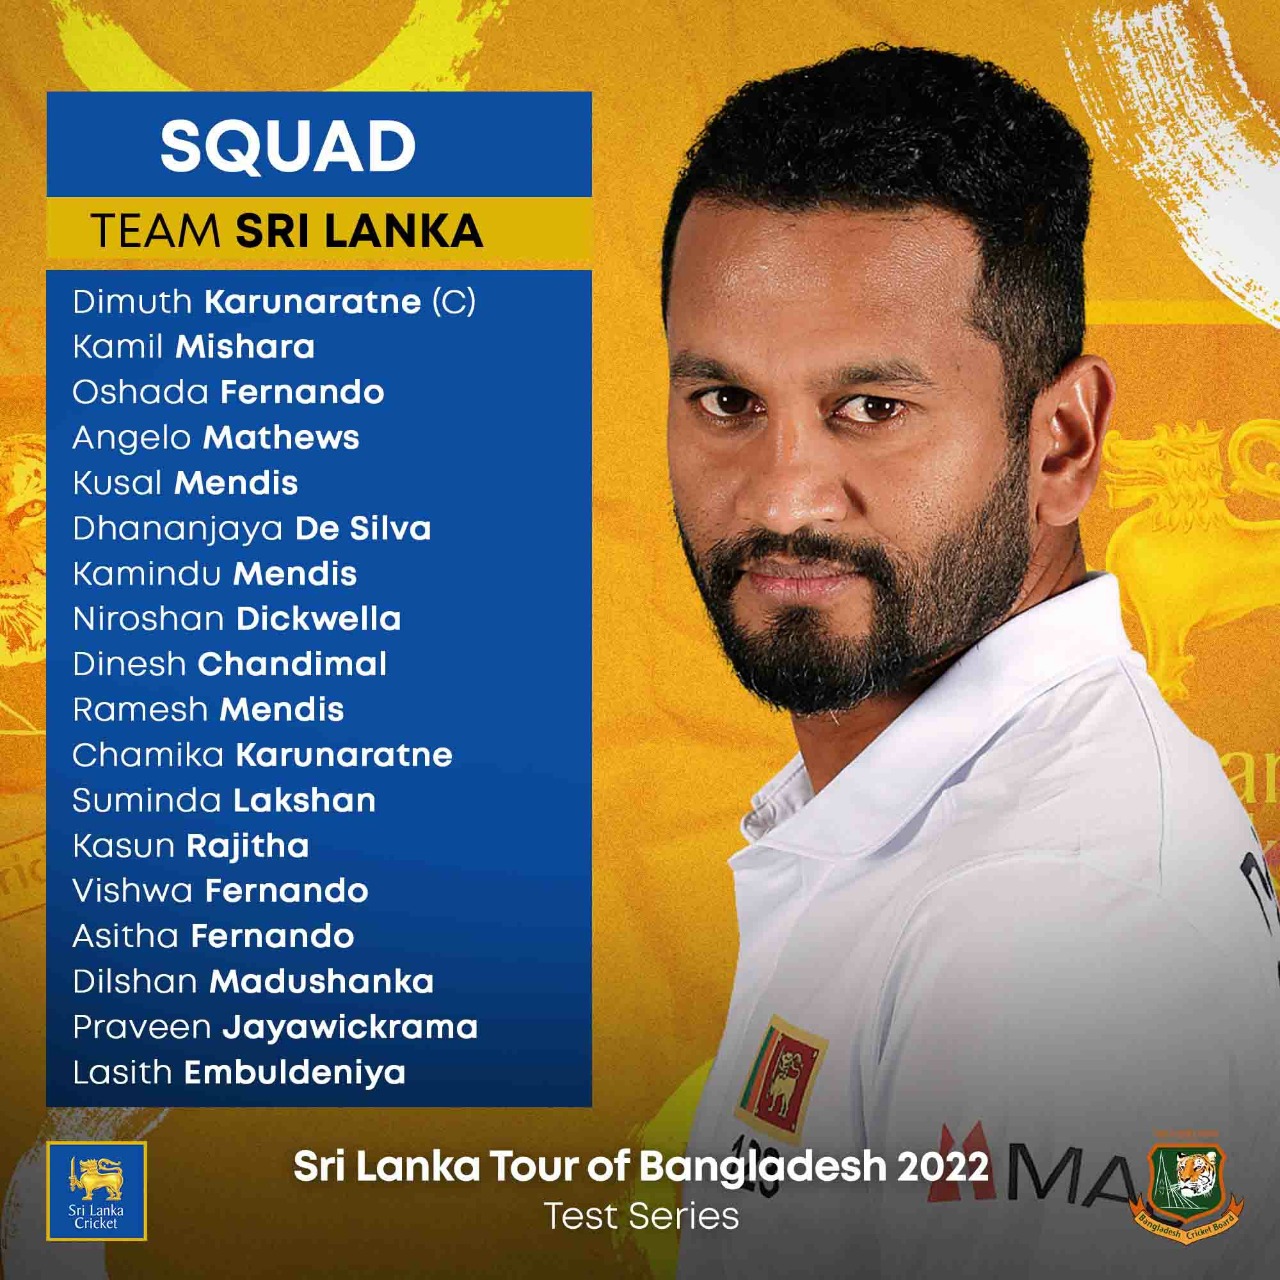 Sri Lanka squad for Bangladesh Test series 2022